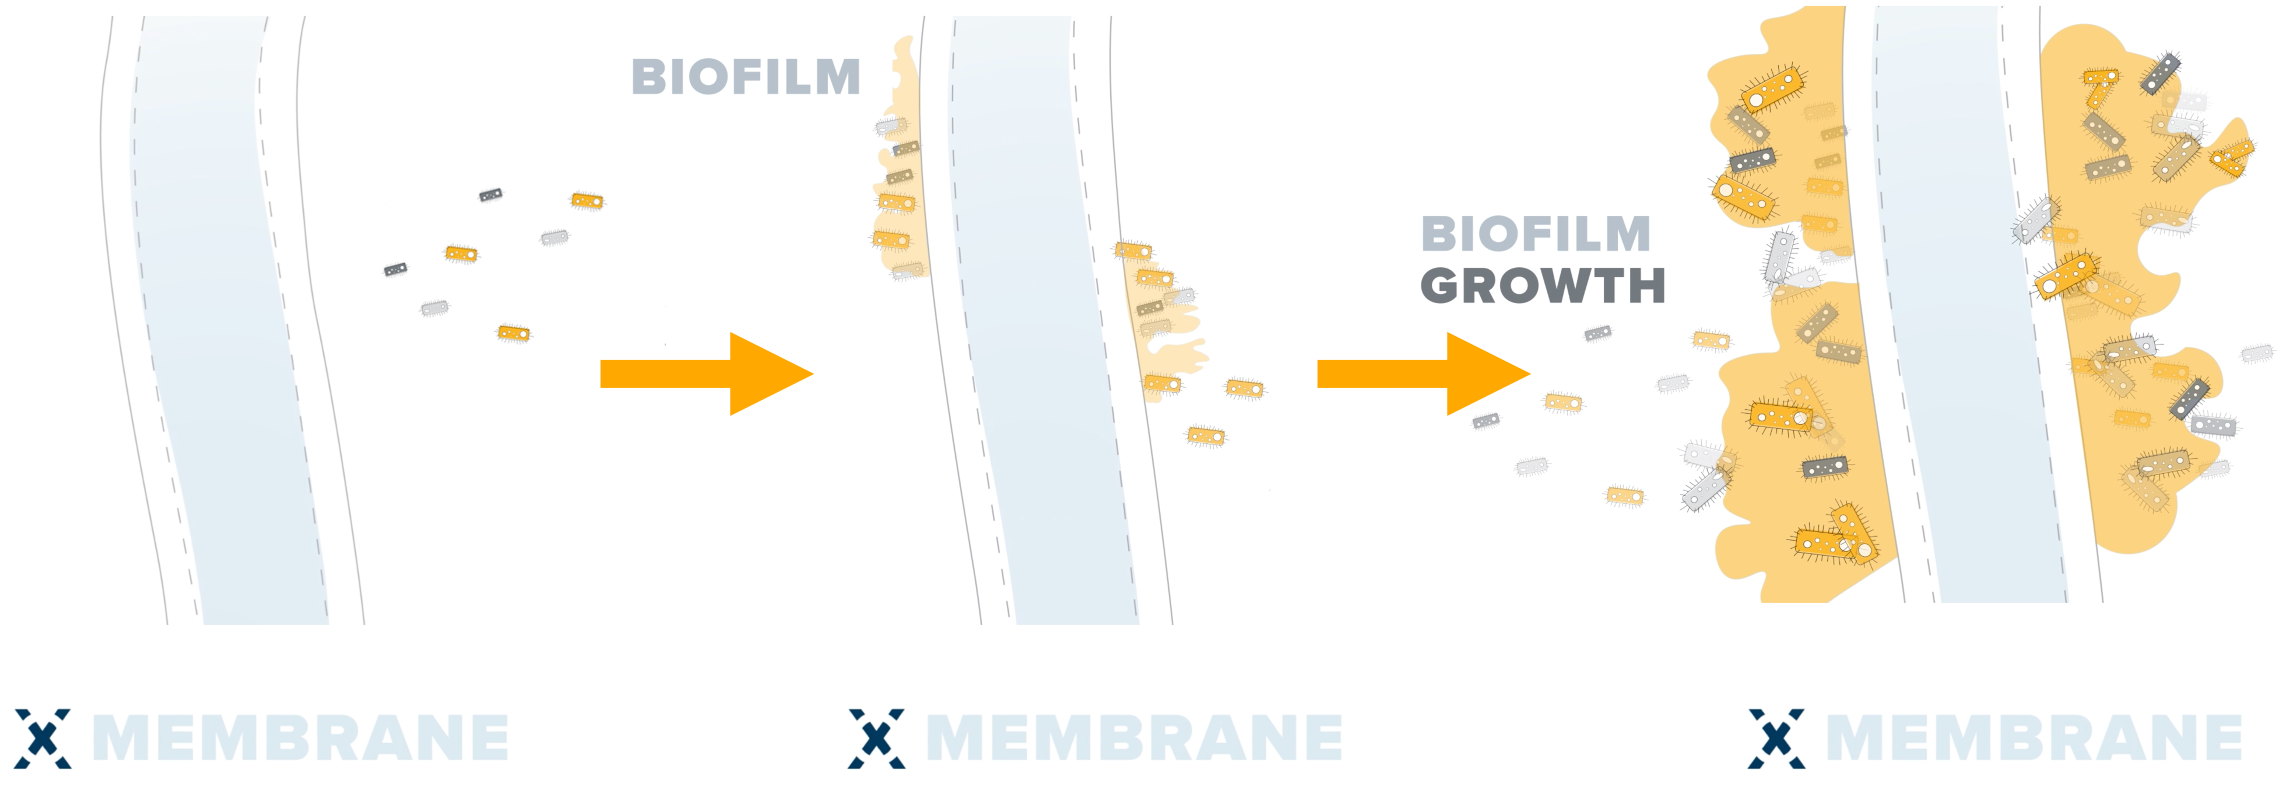 Biofilm growth on the OxyMem membrane